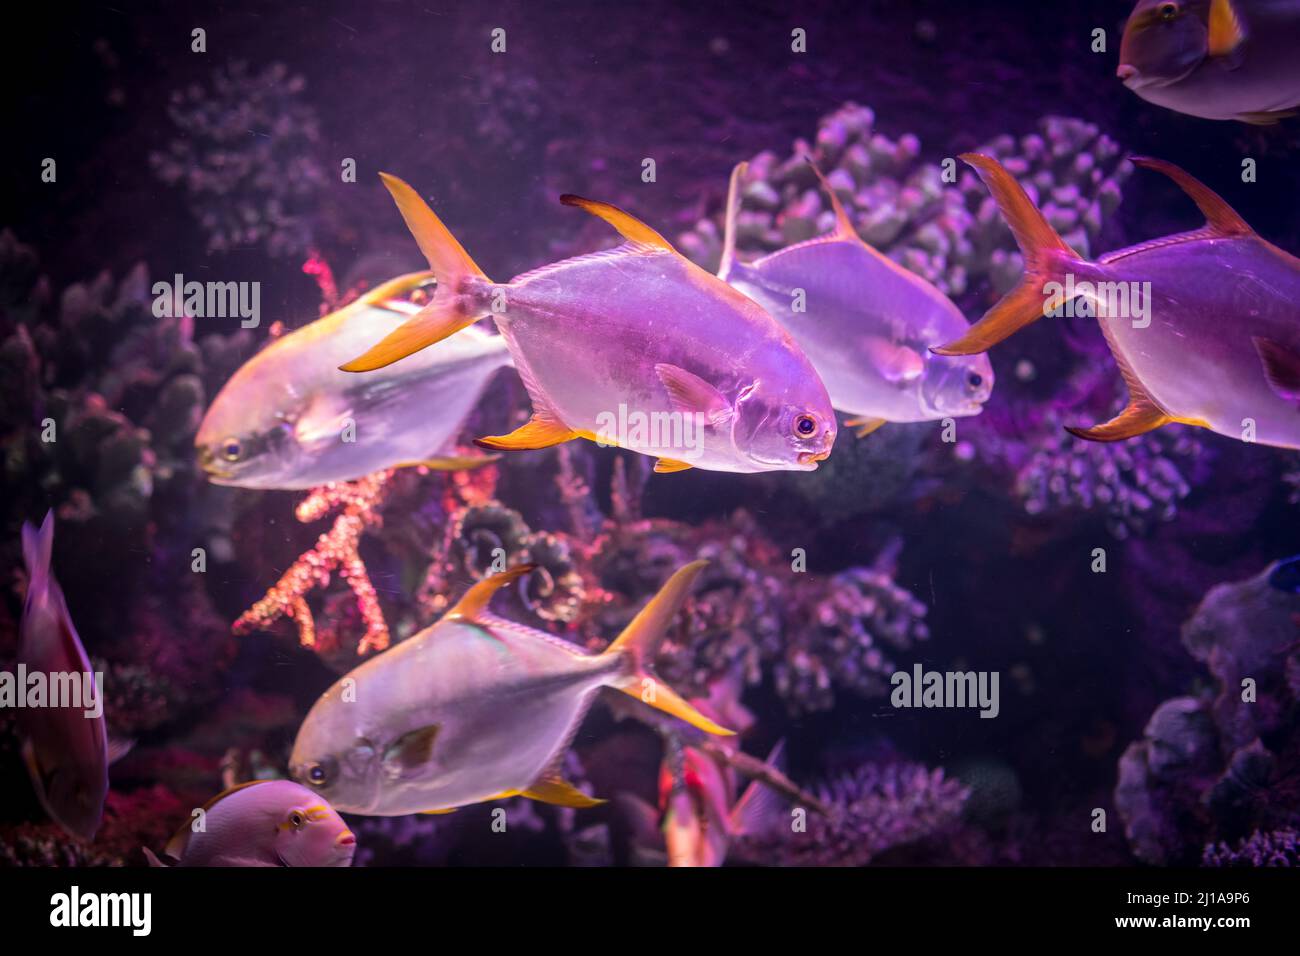 Photo through glass, observing piranha fish in an aquarium. Piaractus brachypomus and Colossoma macropomum in water. Stock Photo